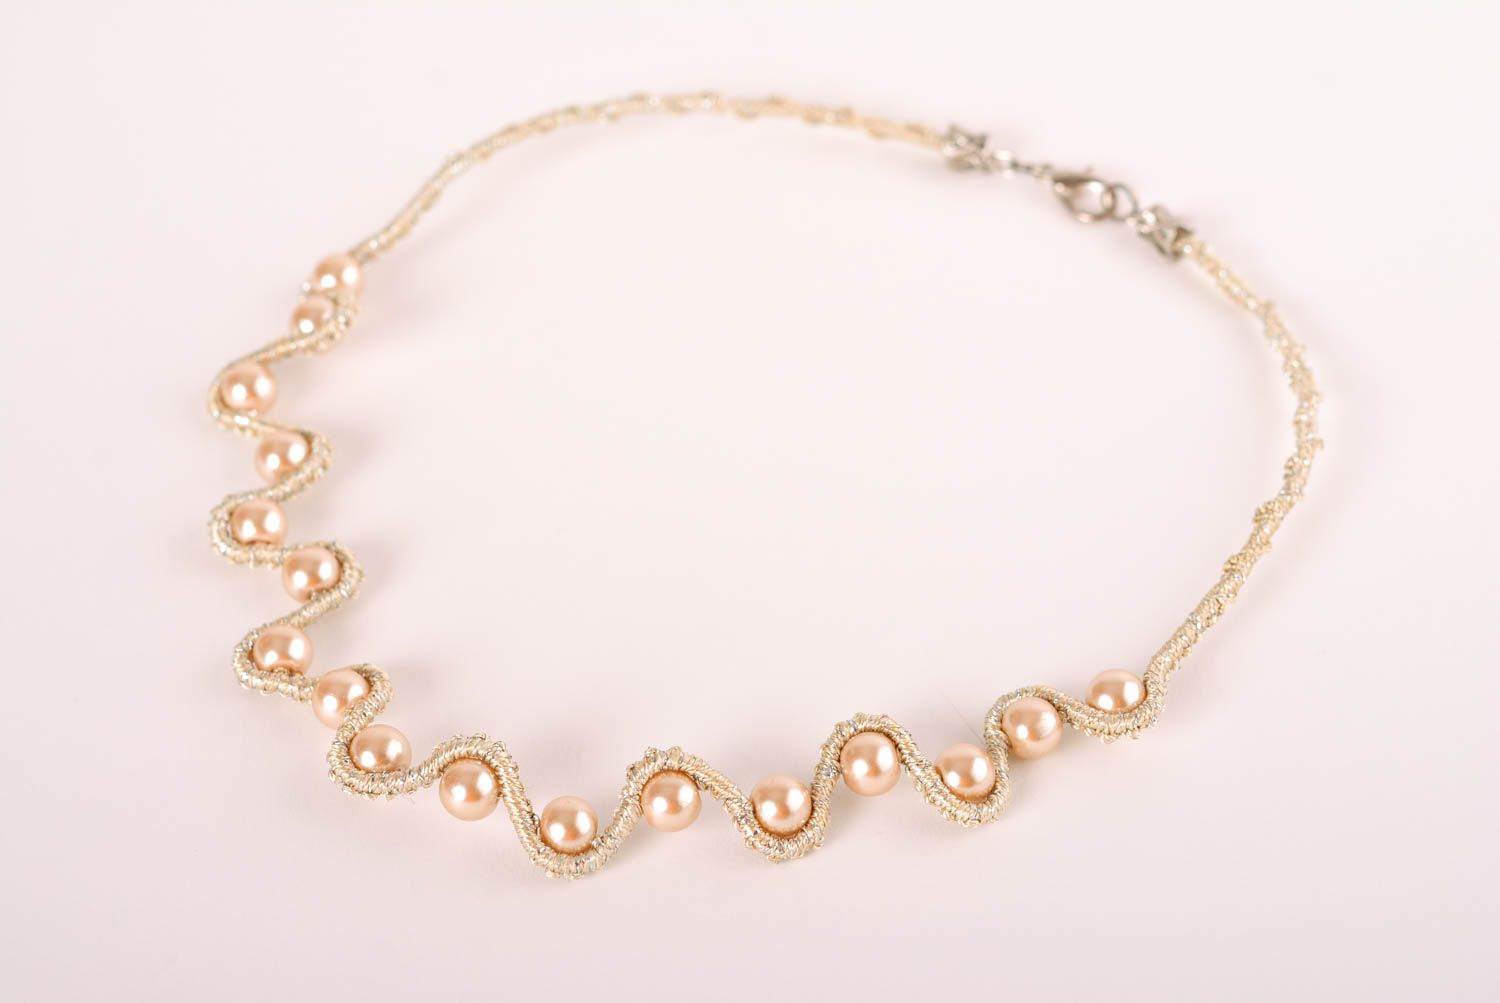 Handmade tender necklace stylish textile necklace elegant accessory gift photo 1